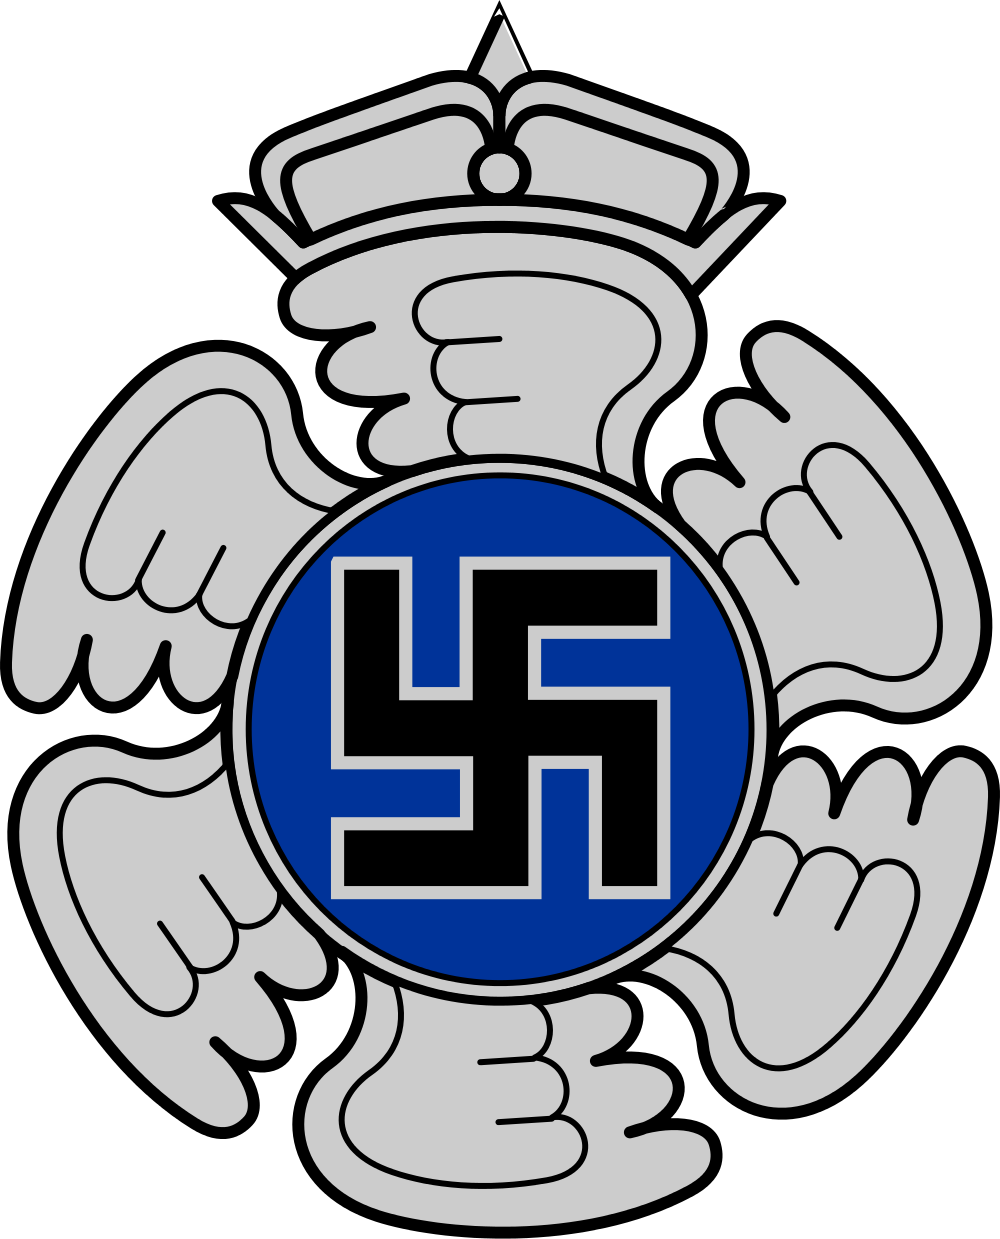 Suomen Lentomerkki - Finnish Air Force Emblem (1000x1239)